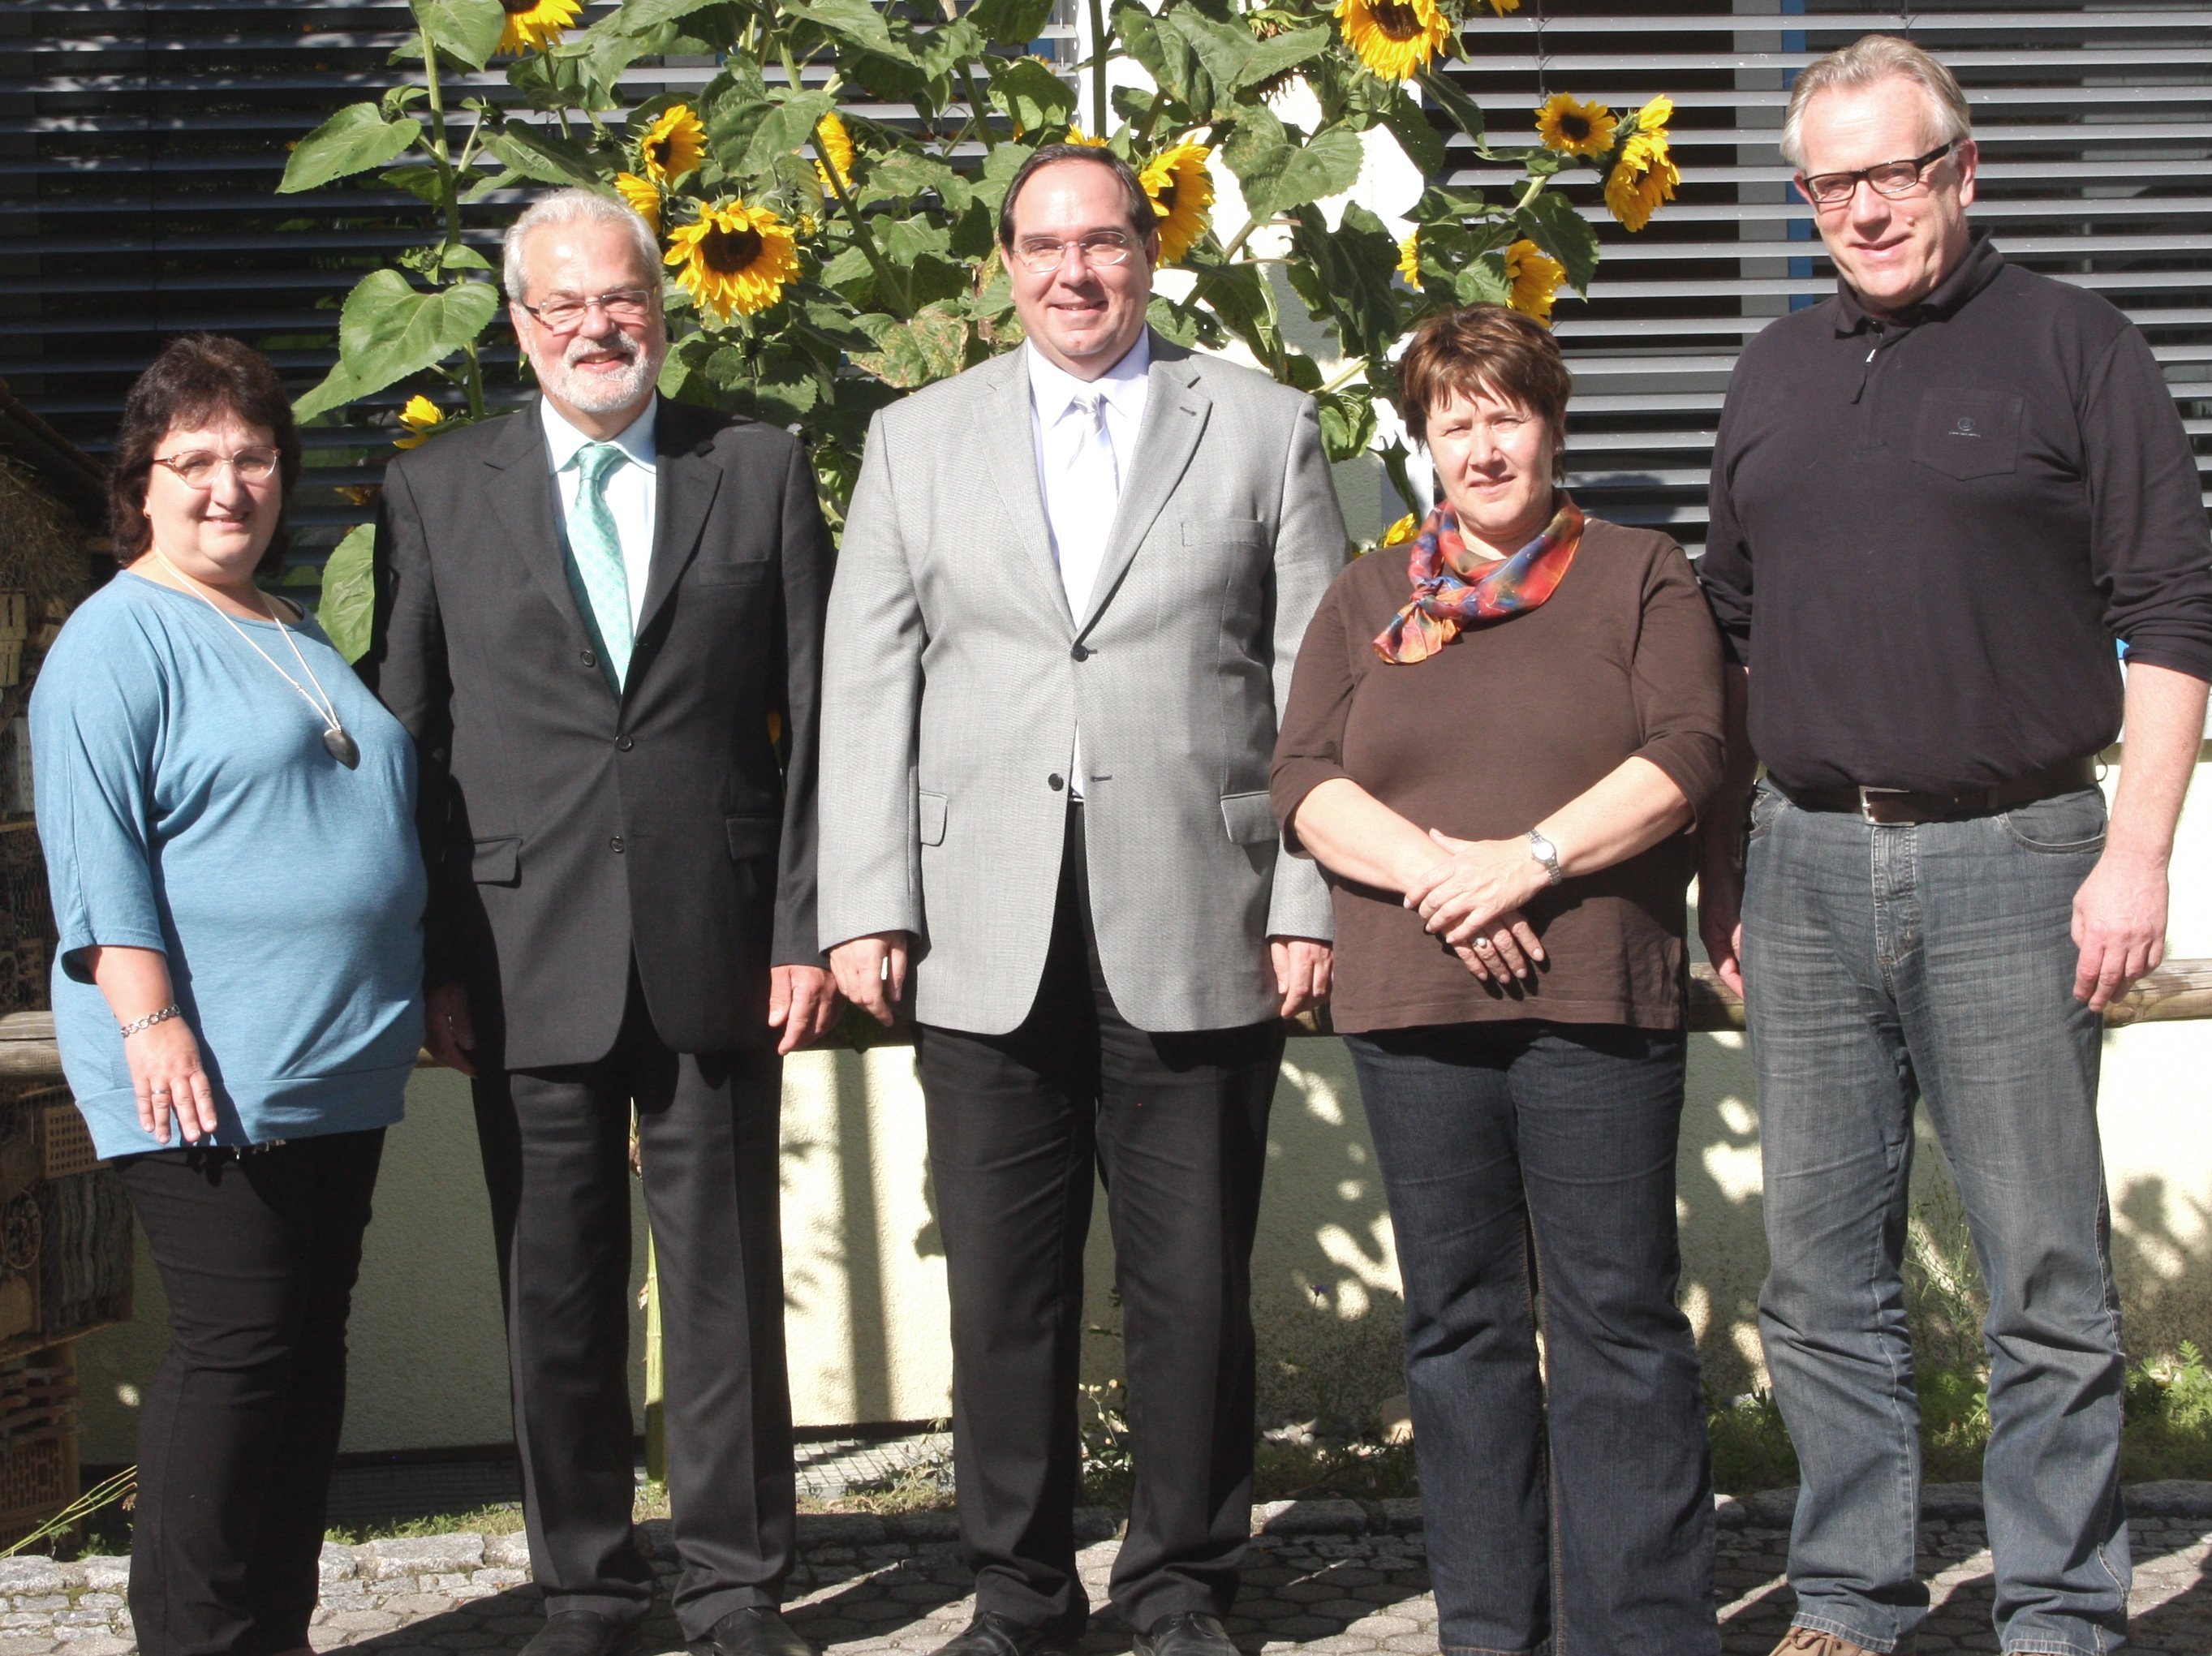  Foto v. links: Jugendbeauftragte Yvonne Giwitsch, Landtagsabgeordneter Norbert Zeller (SPD), Bürgermeister Schäfer, Konrektorin Mahler und Rektor Dorner 